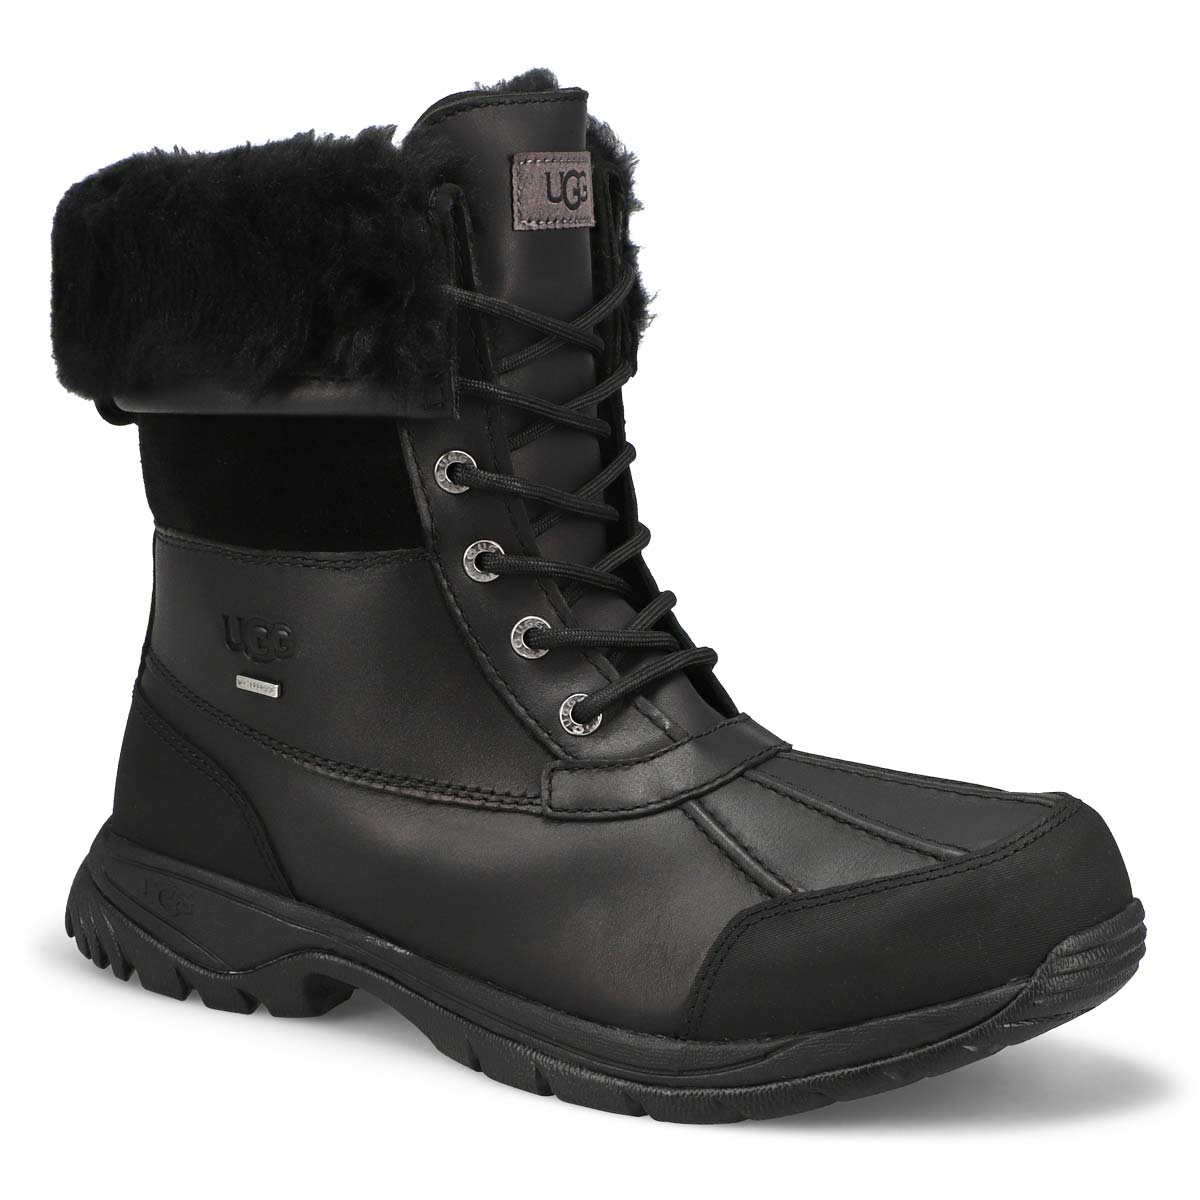 softmoc men's winter boots